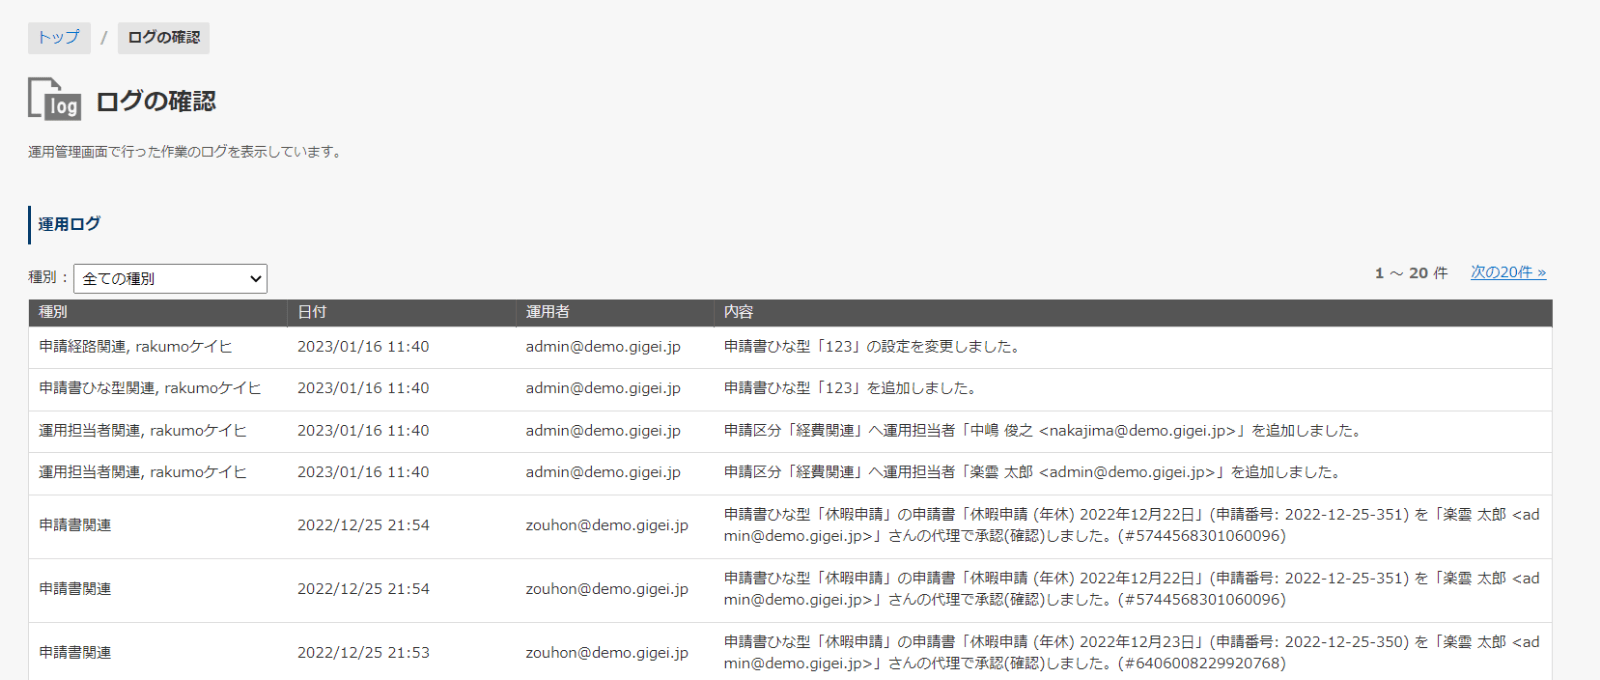 rakumo ワークフロー ログの確認画面